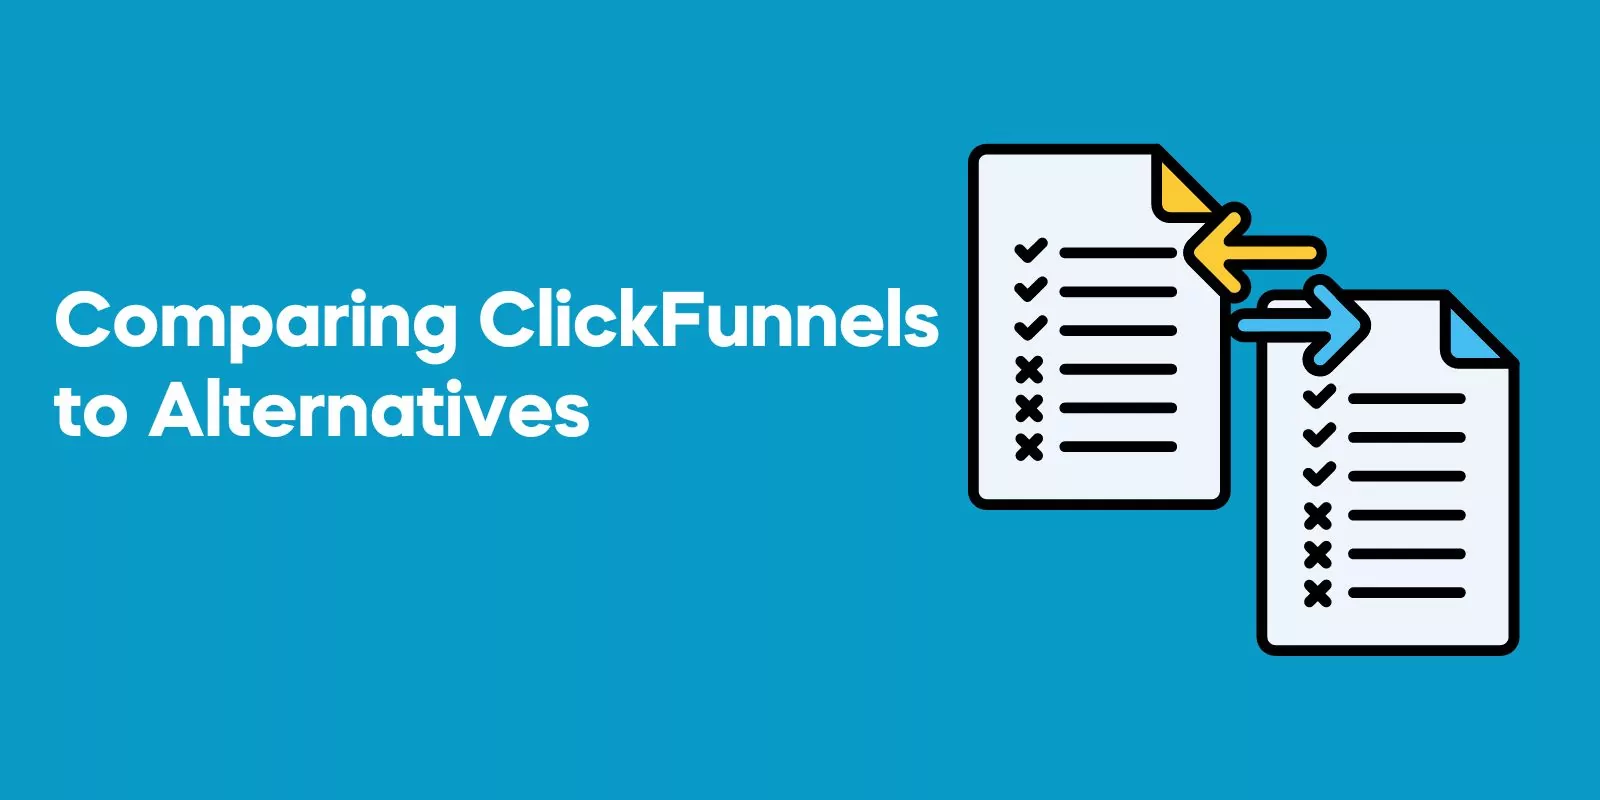 Comparing ClickFunnels to Alternatives